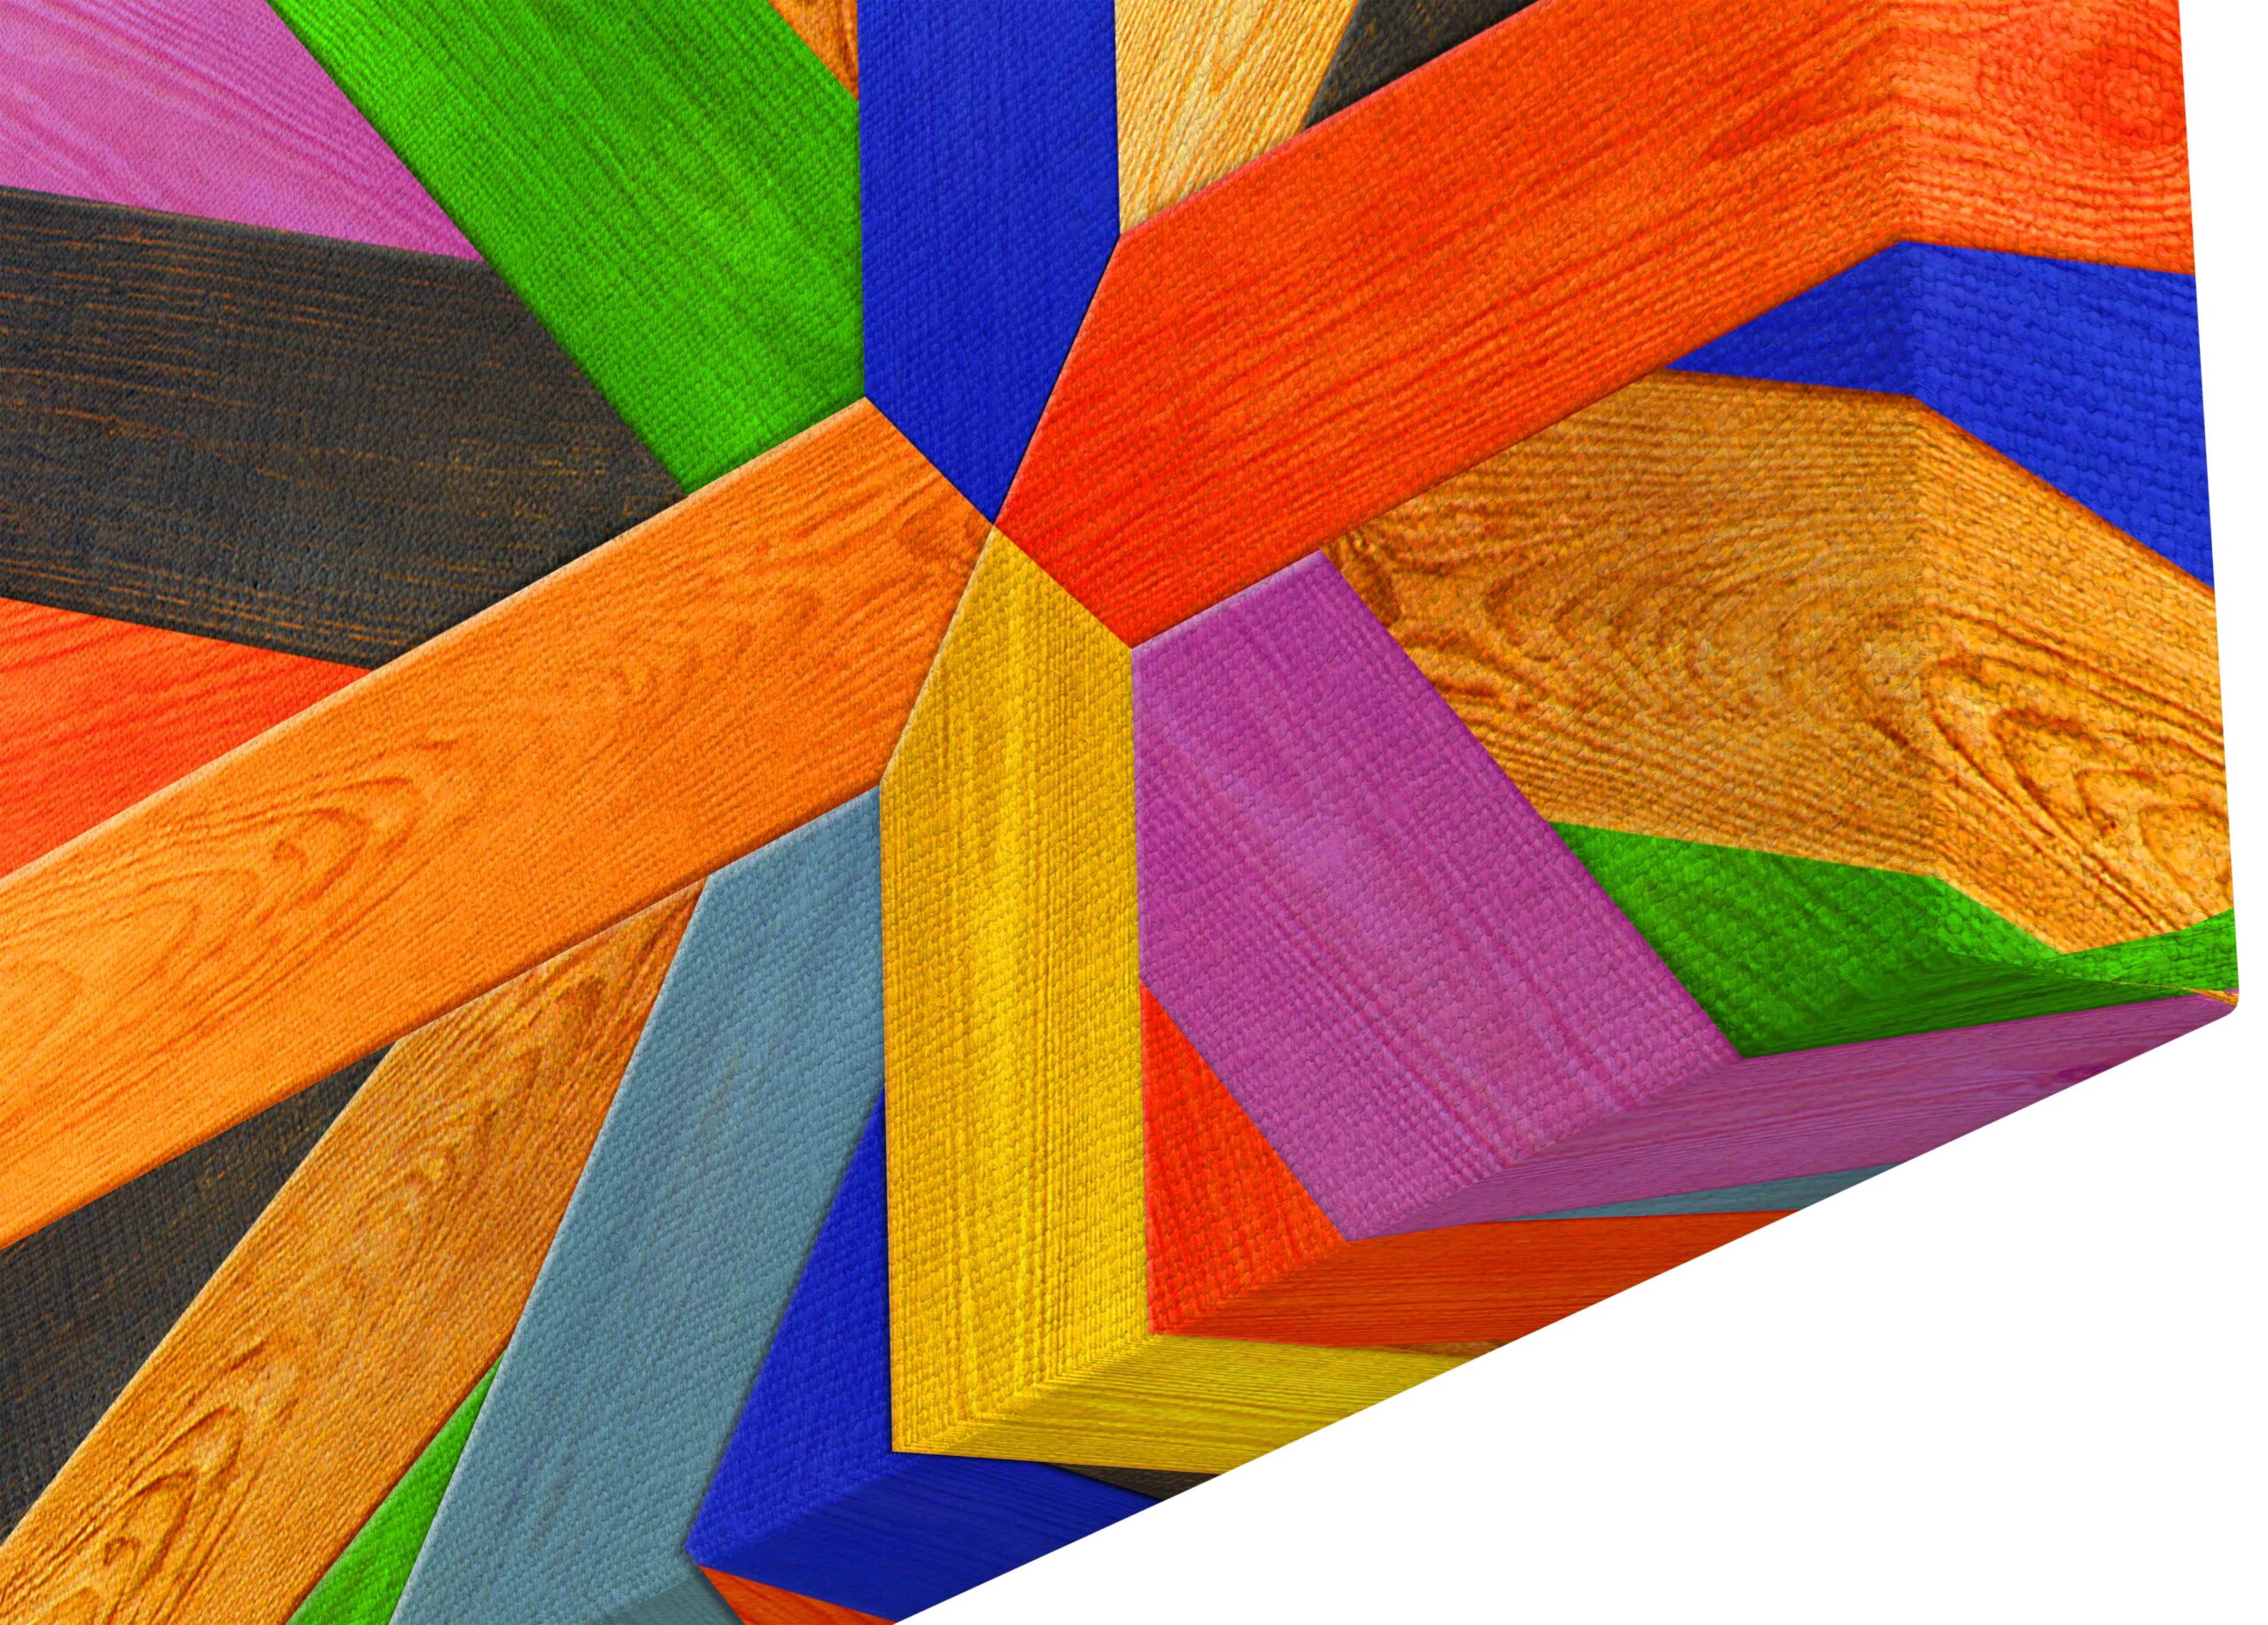 Multicolored wooden boards